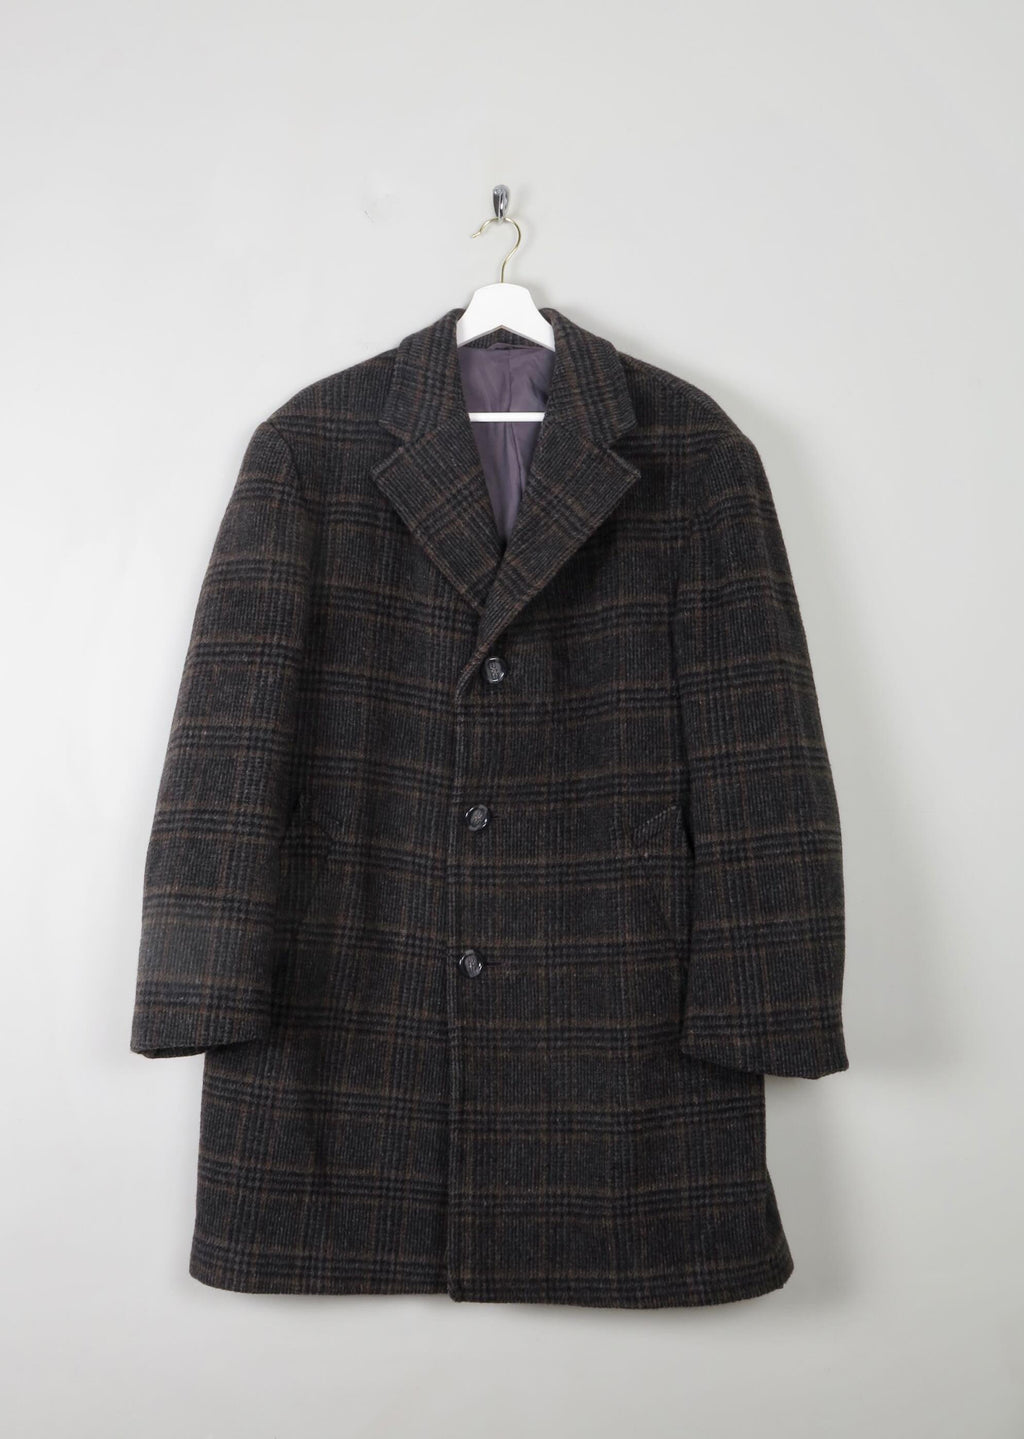 Mens Vintage Check Wool Coat 46/L/XL - The Harlequin